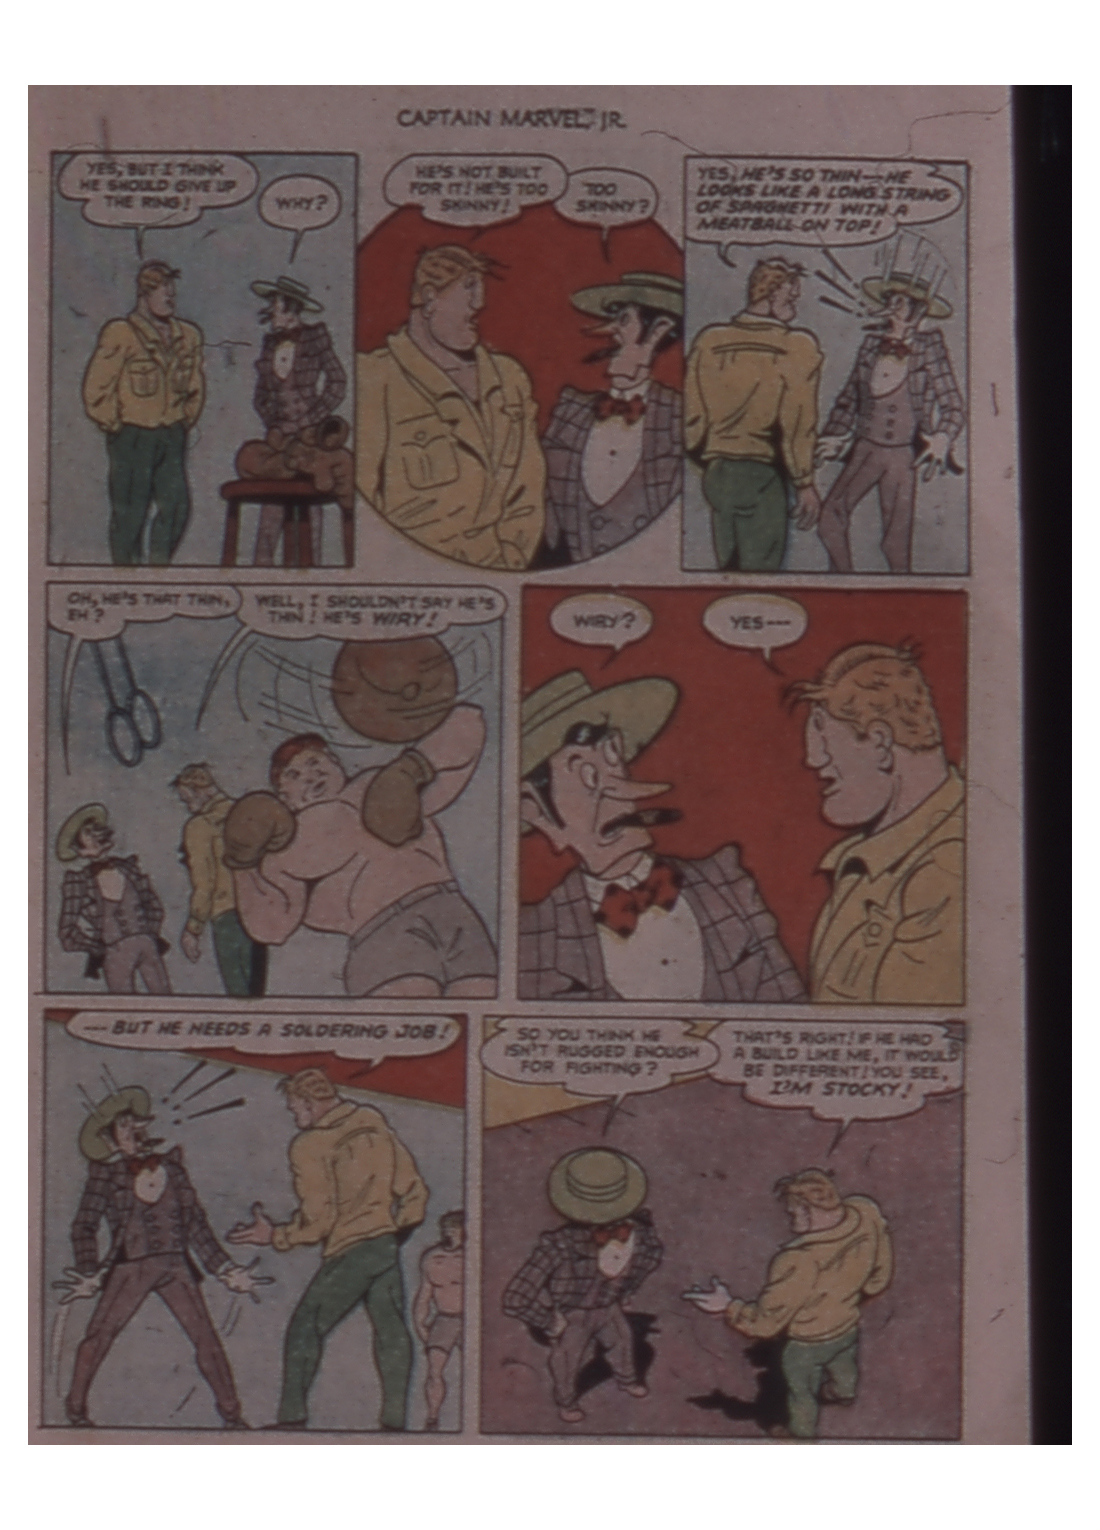 Read online Captain Marvel, Jr. comic -  Issue #114 - 15